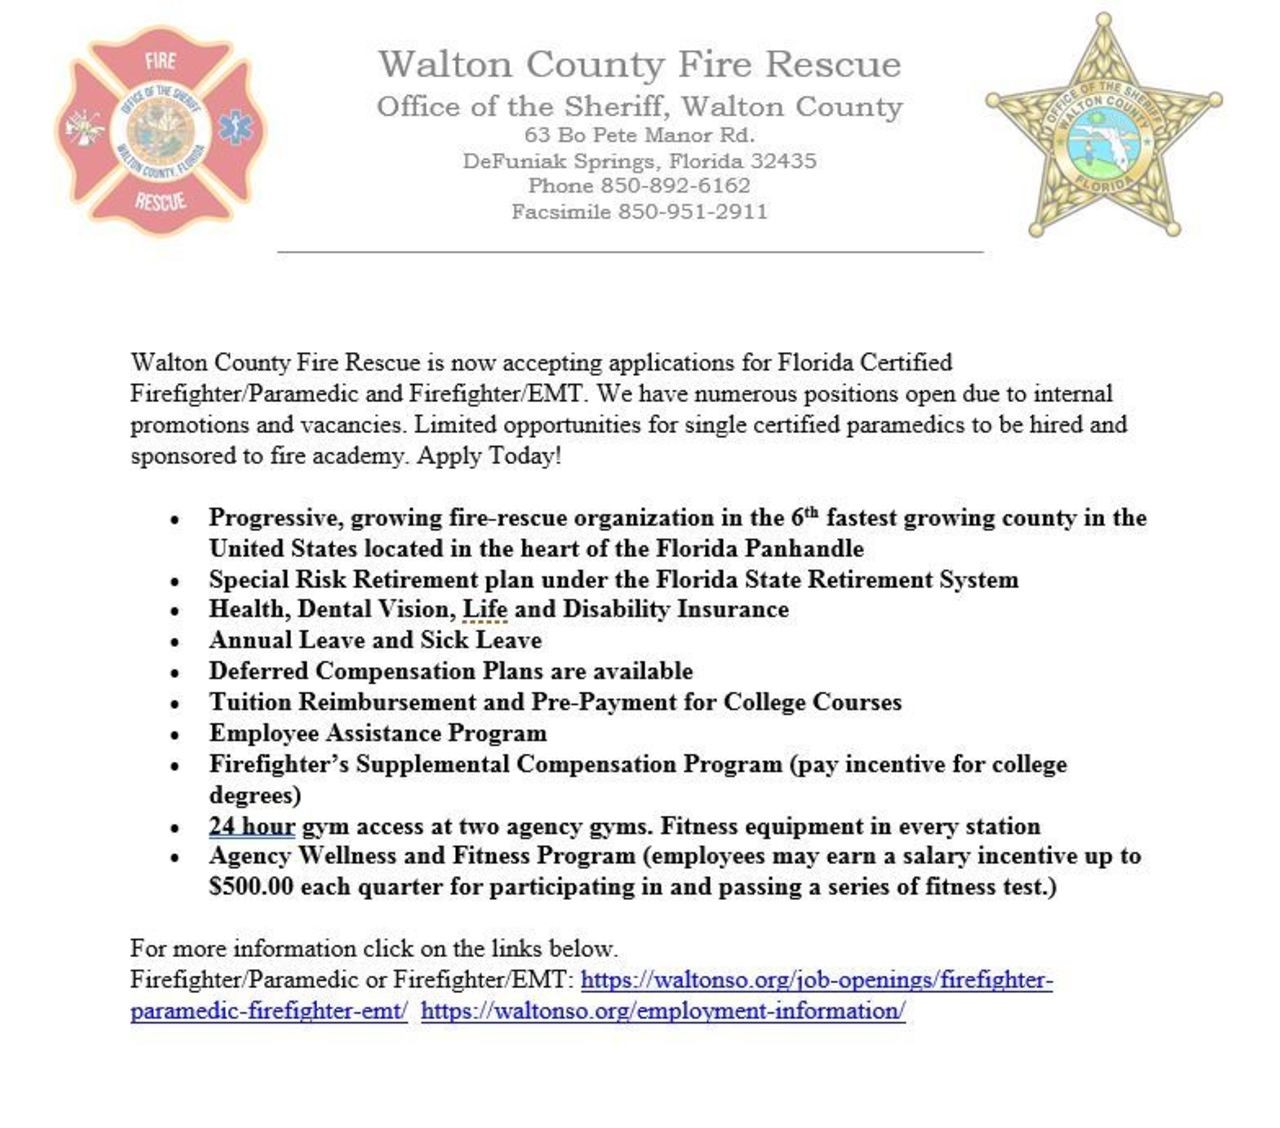 Walton County Fire Rescue Hiring Firefighter/EMT & Firefighter/Paramedic